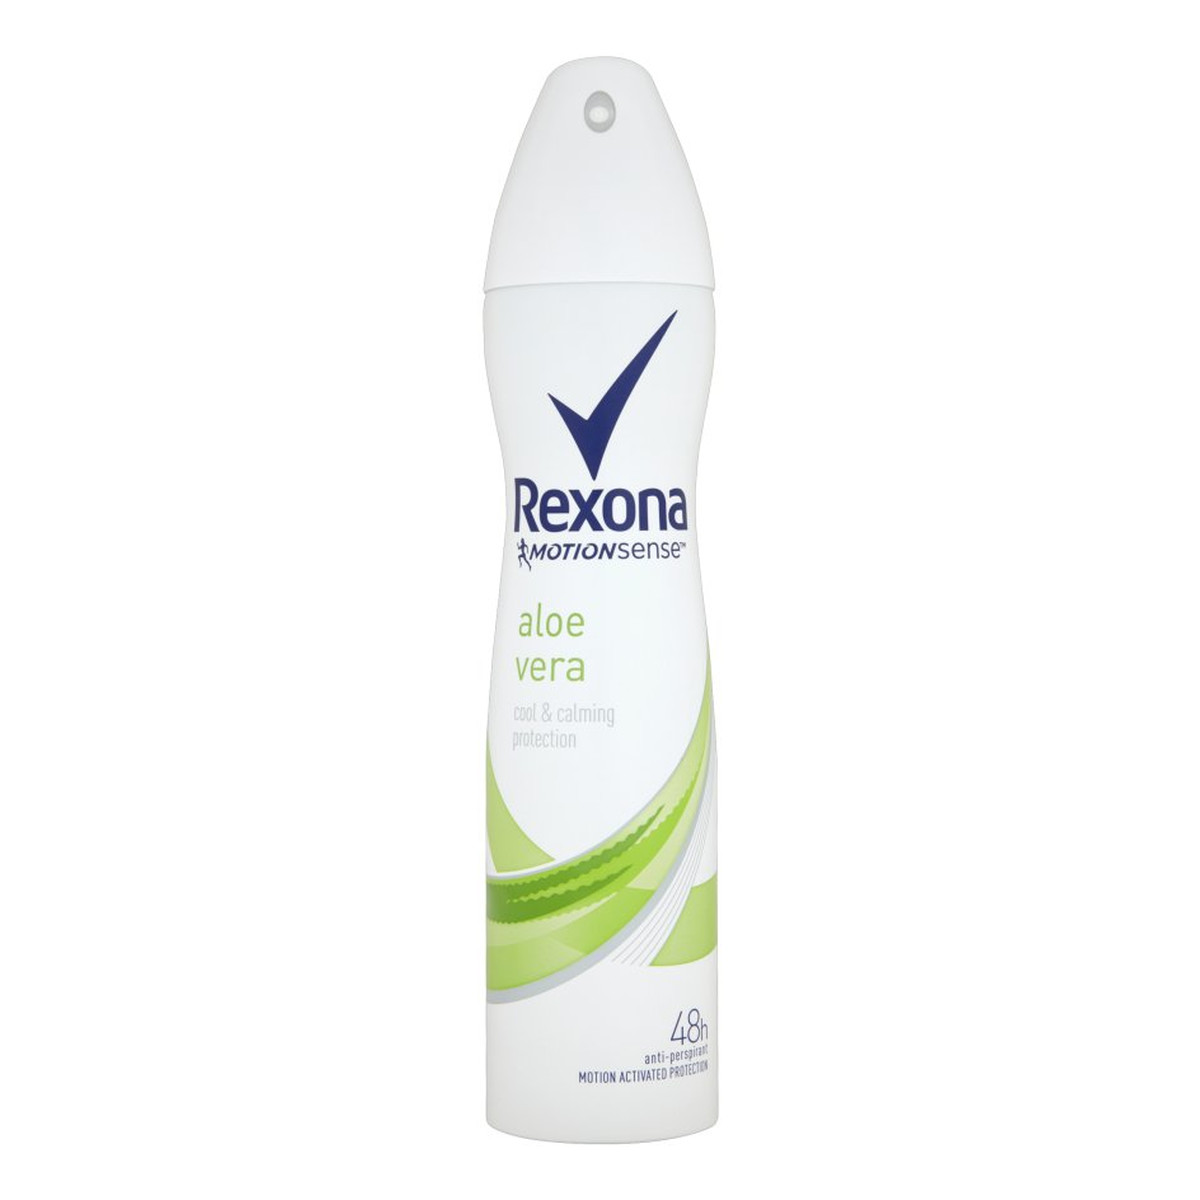 Rexona Motion Sense Aloe Vera dezodorant 150ml